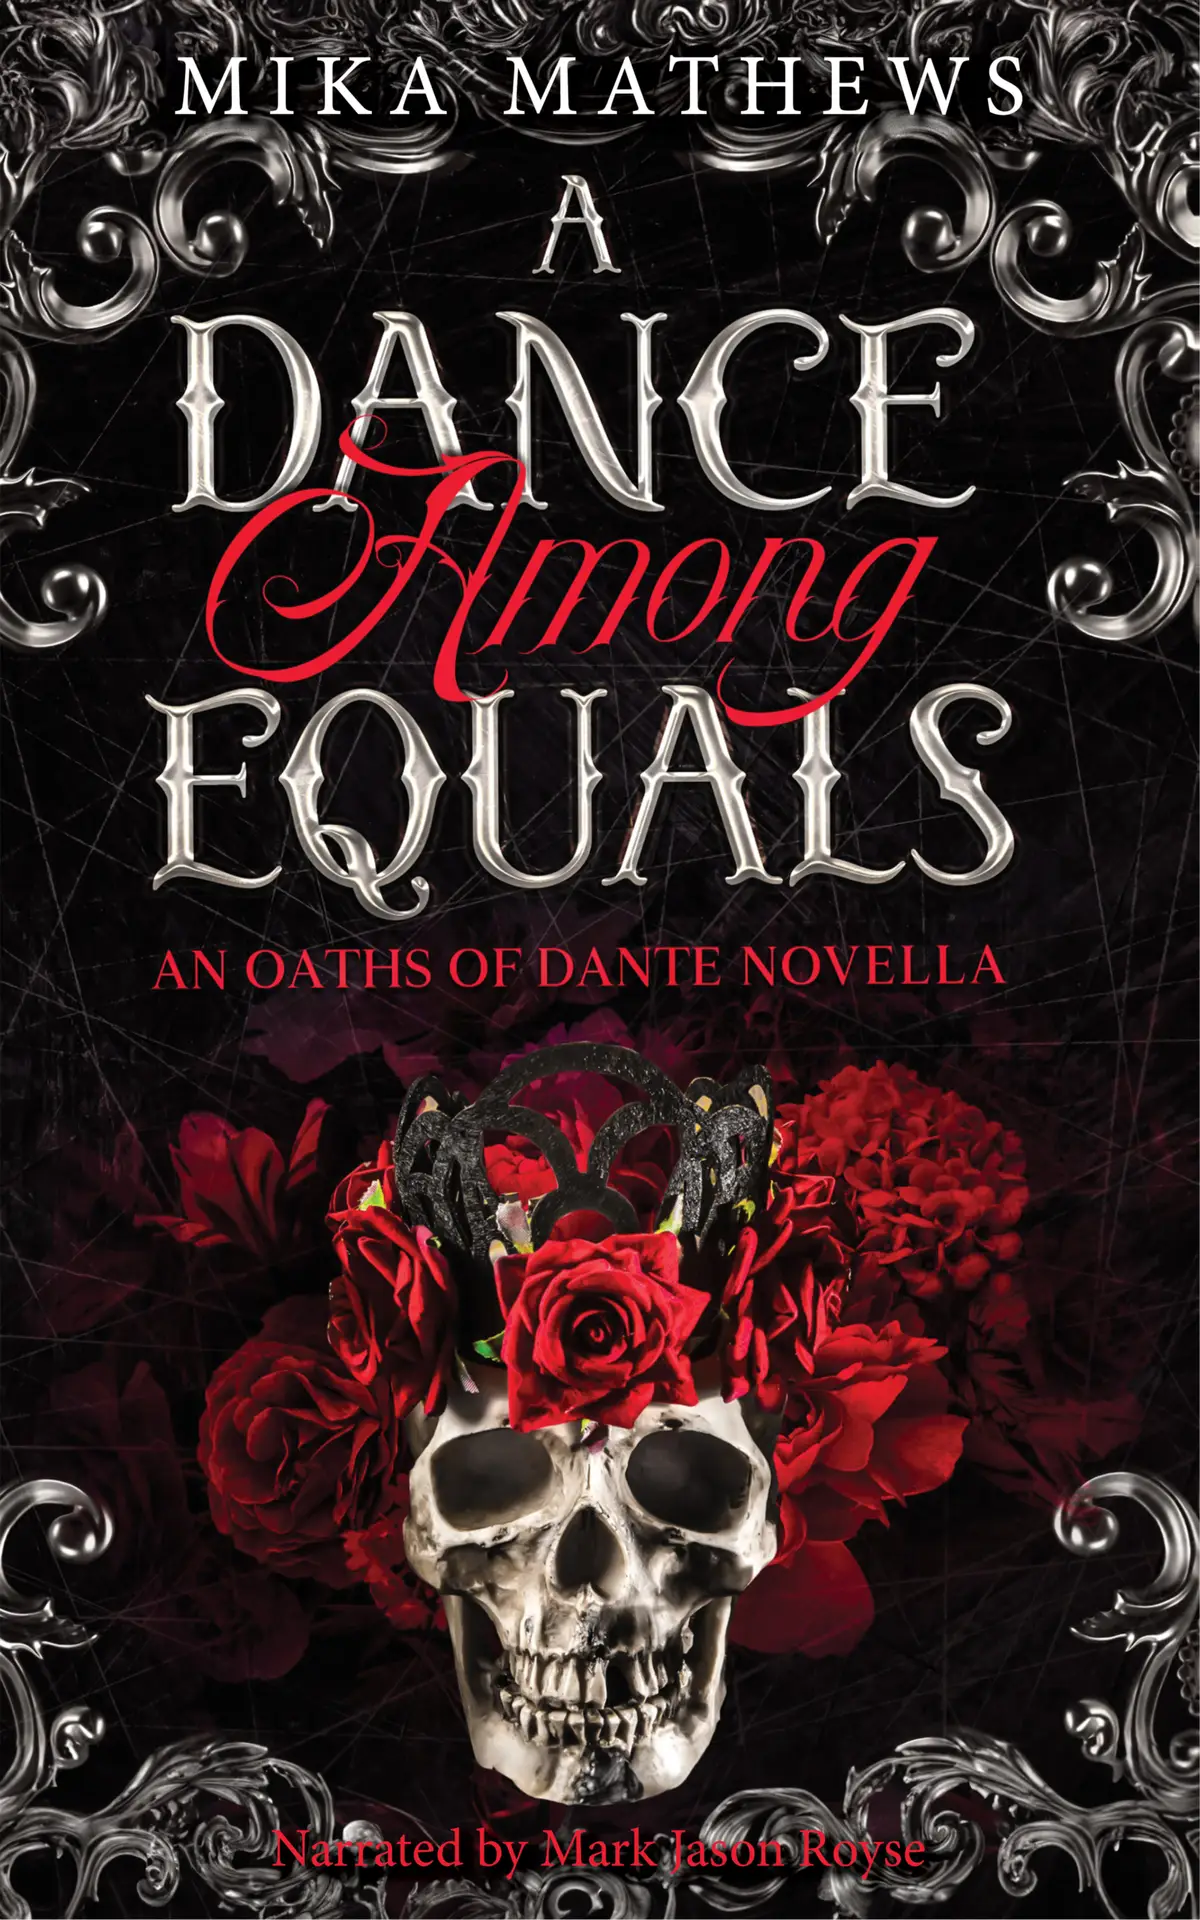 Dance Among Equals, Mark Jason Royse, audiobook narrator